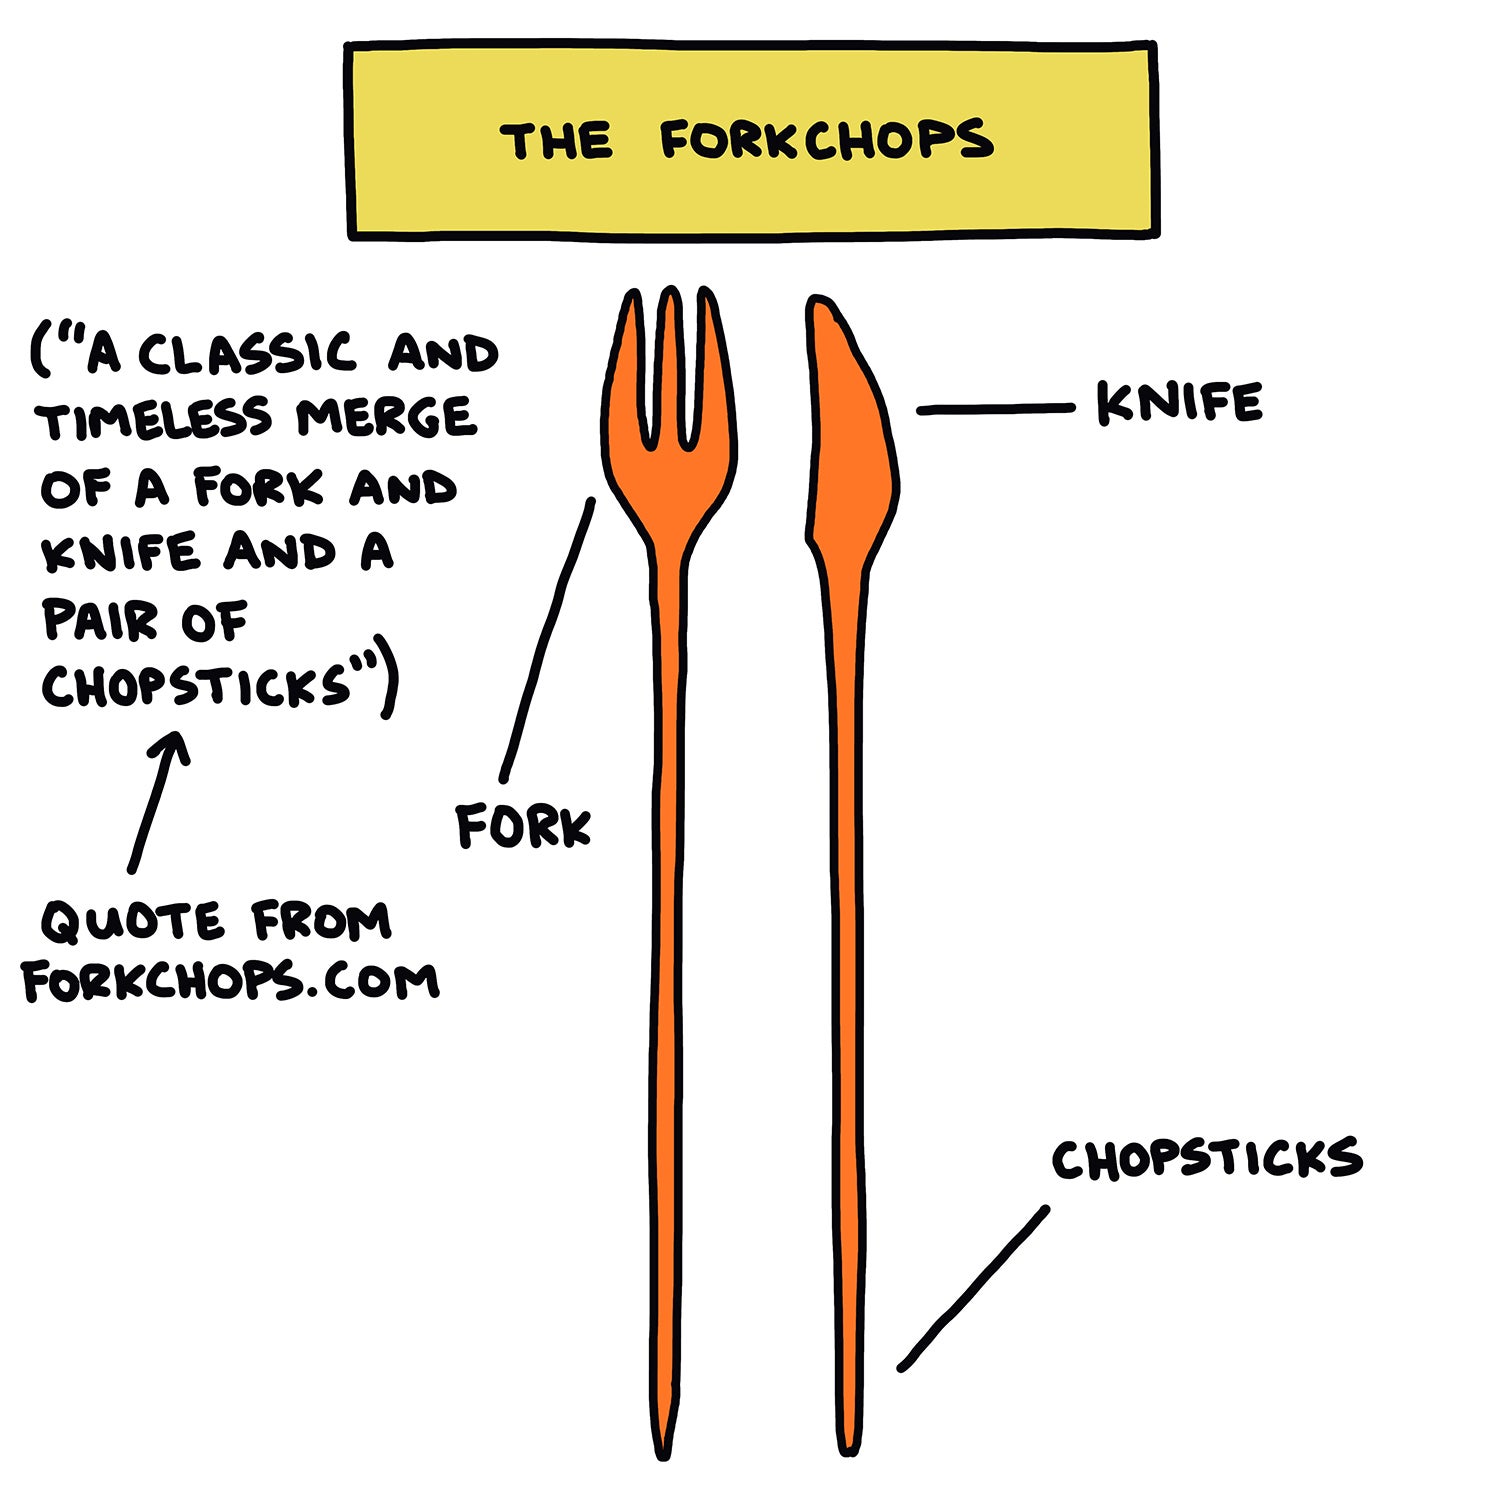 The Forkchops